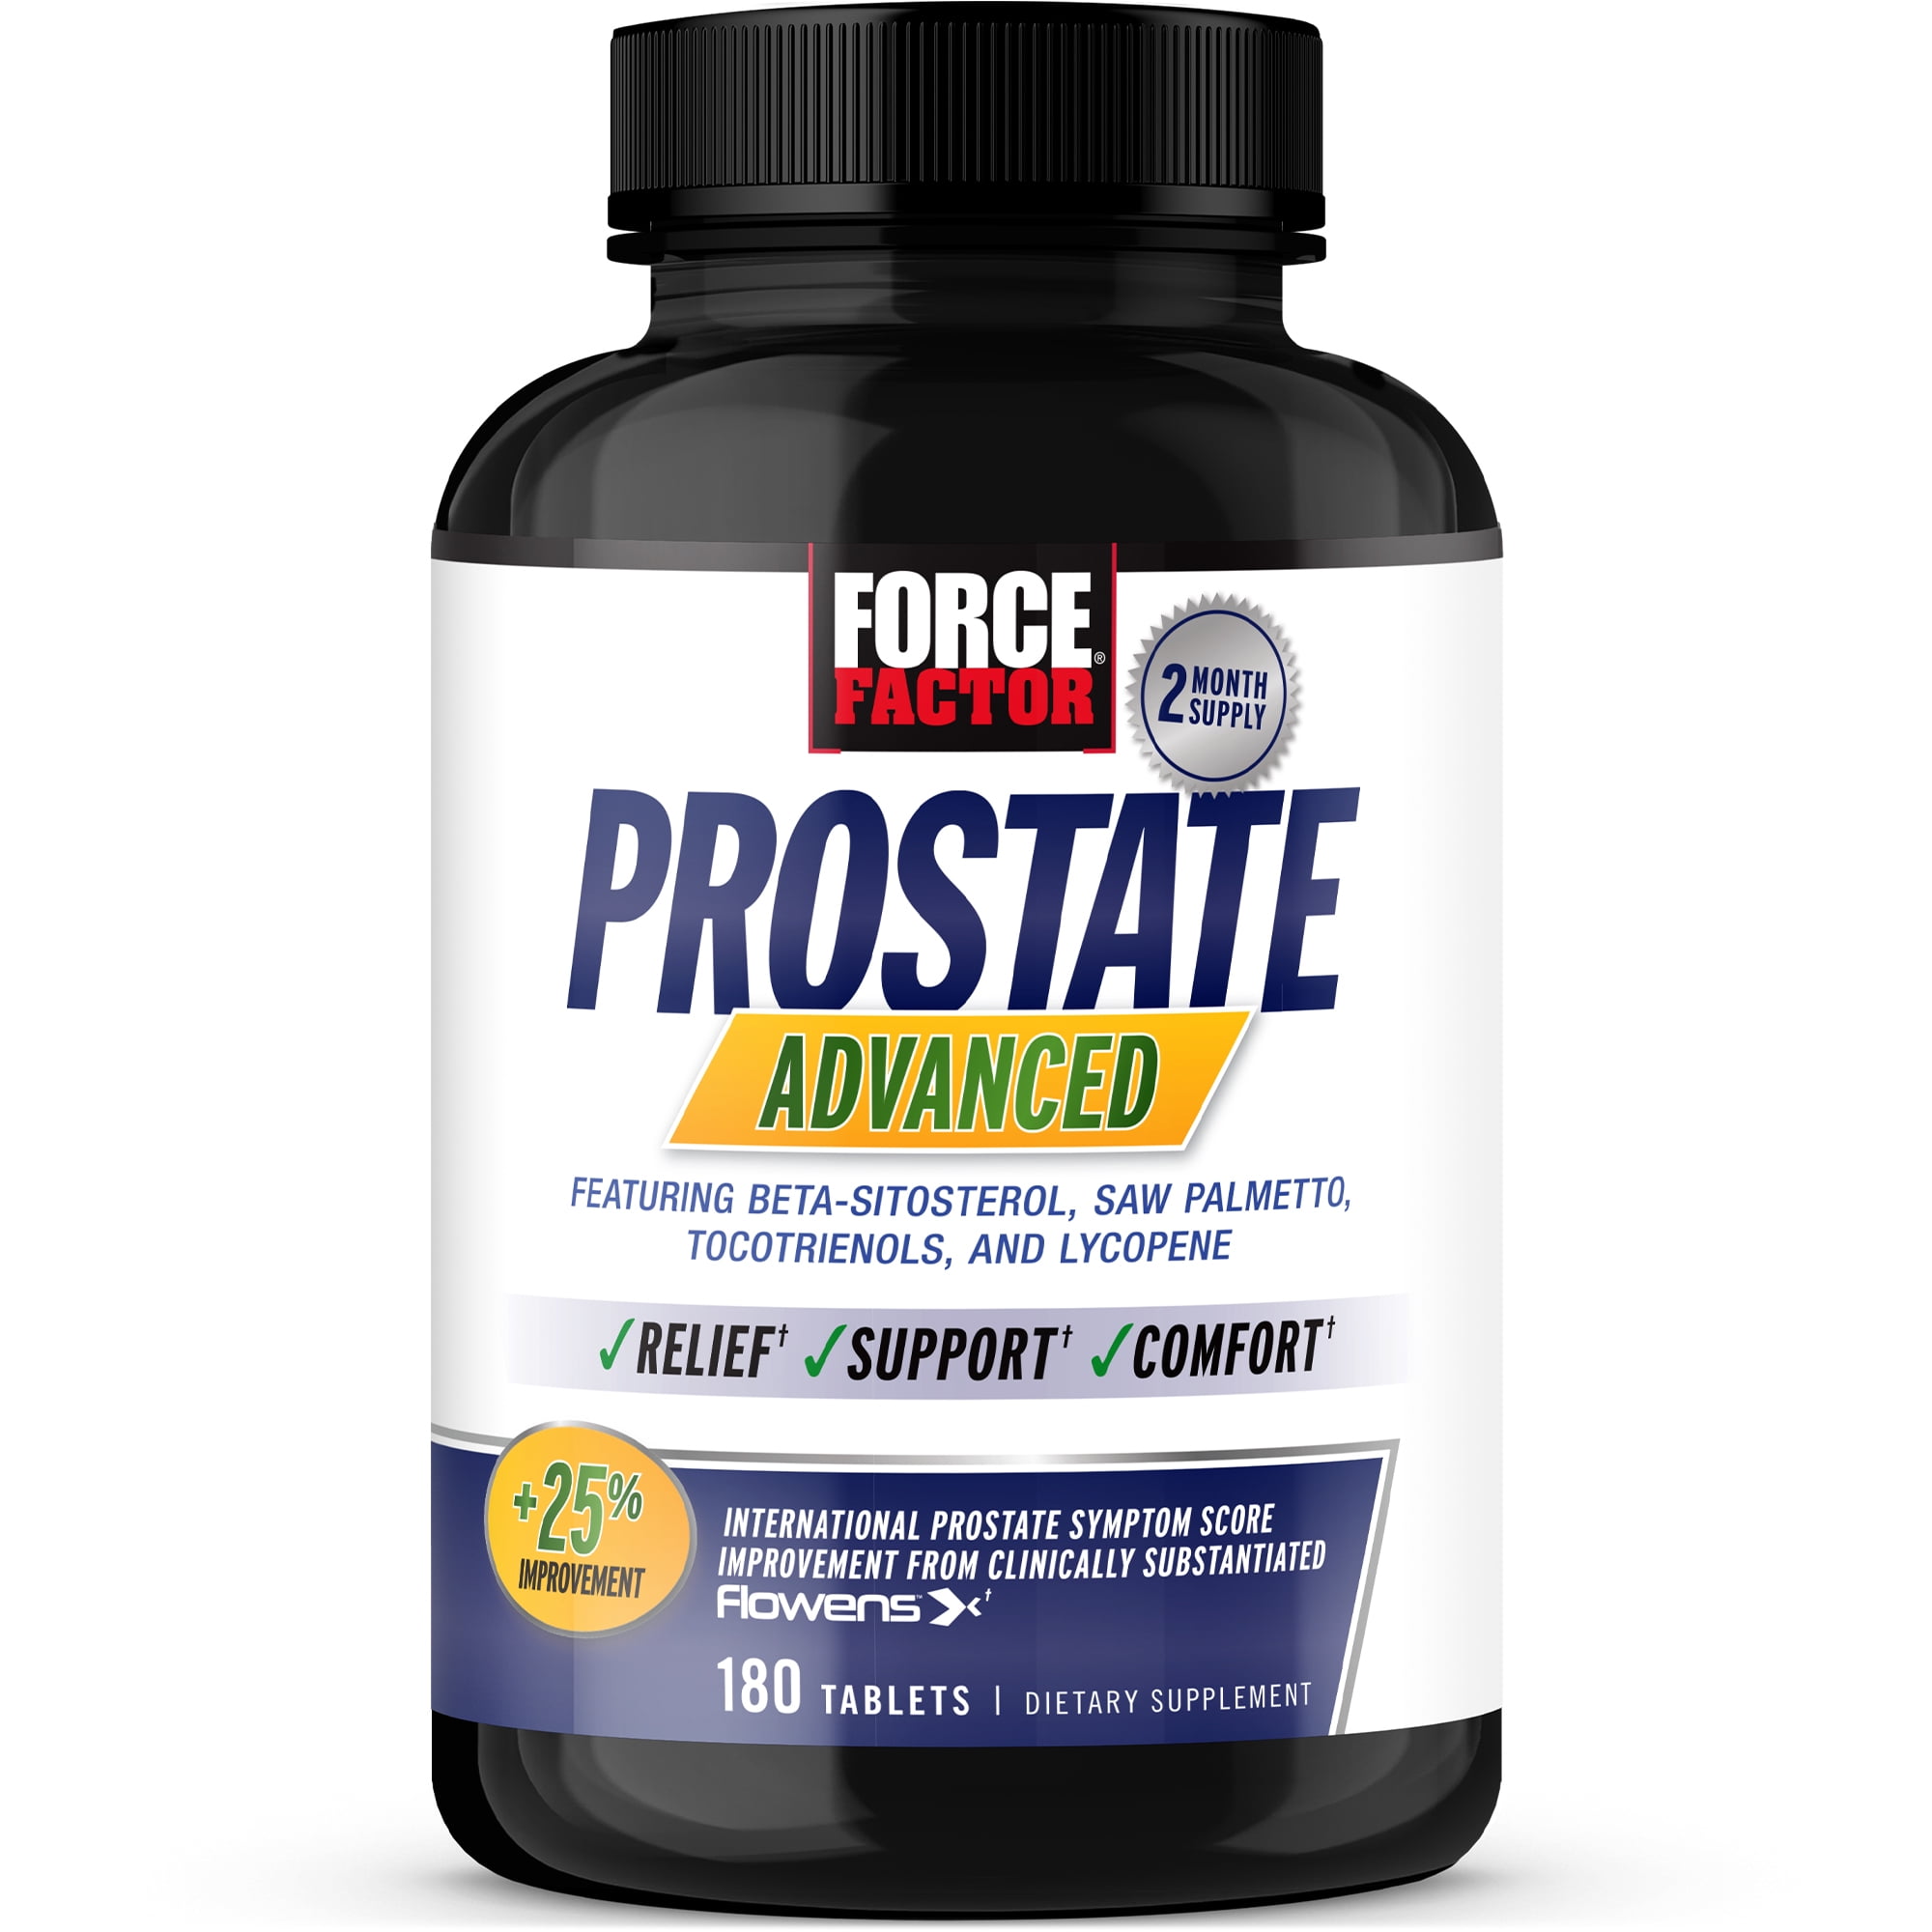 Force Factor Prostate Advanced, Prostate Supplement for Men,180 Tablets